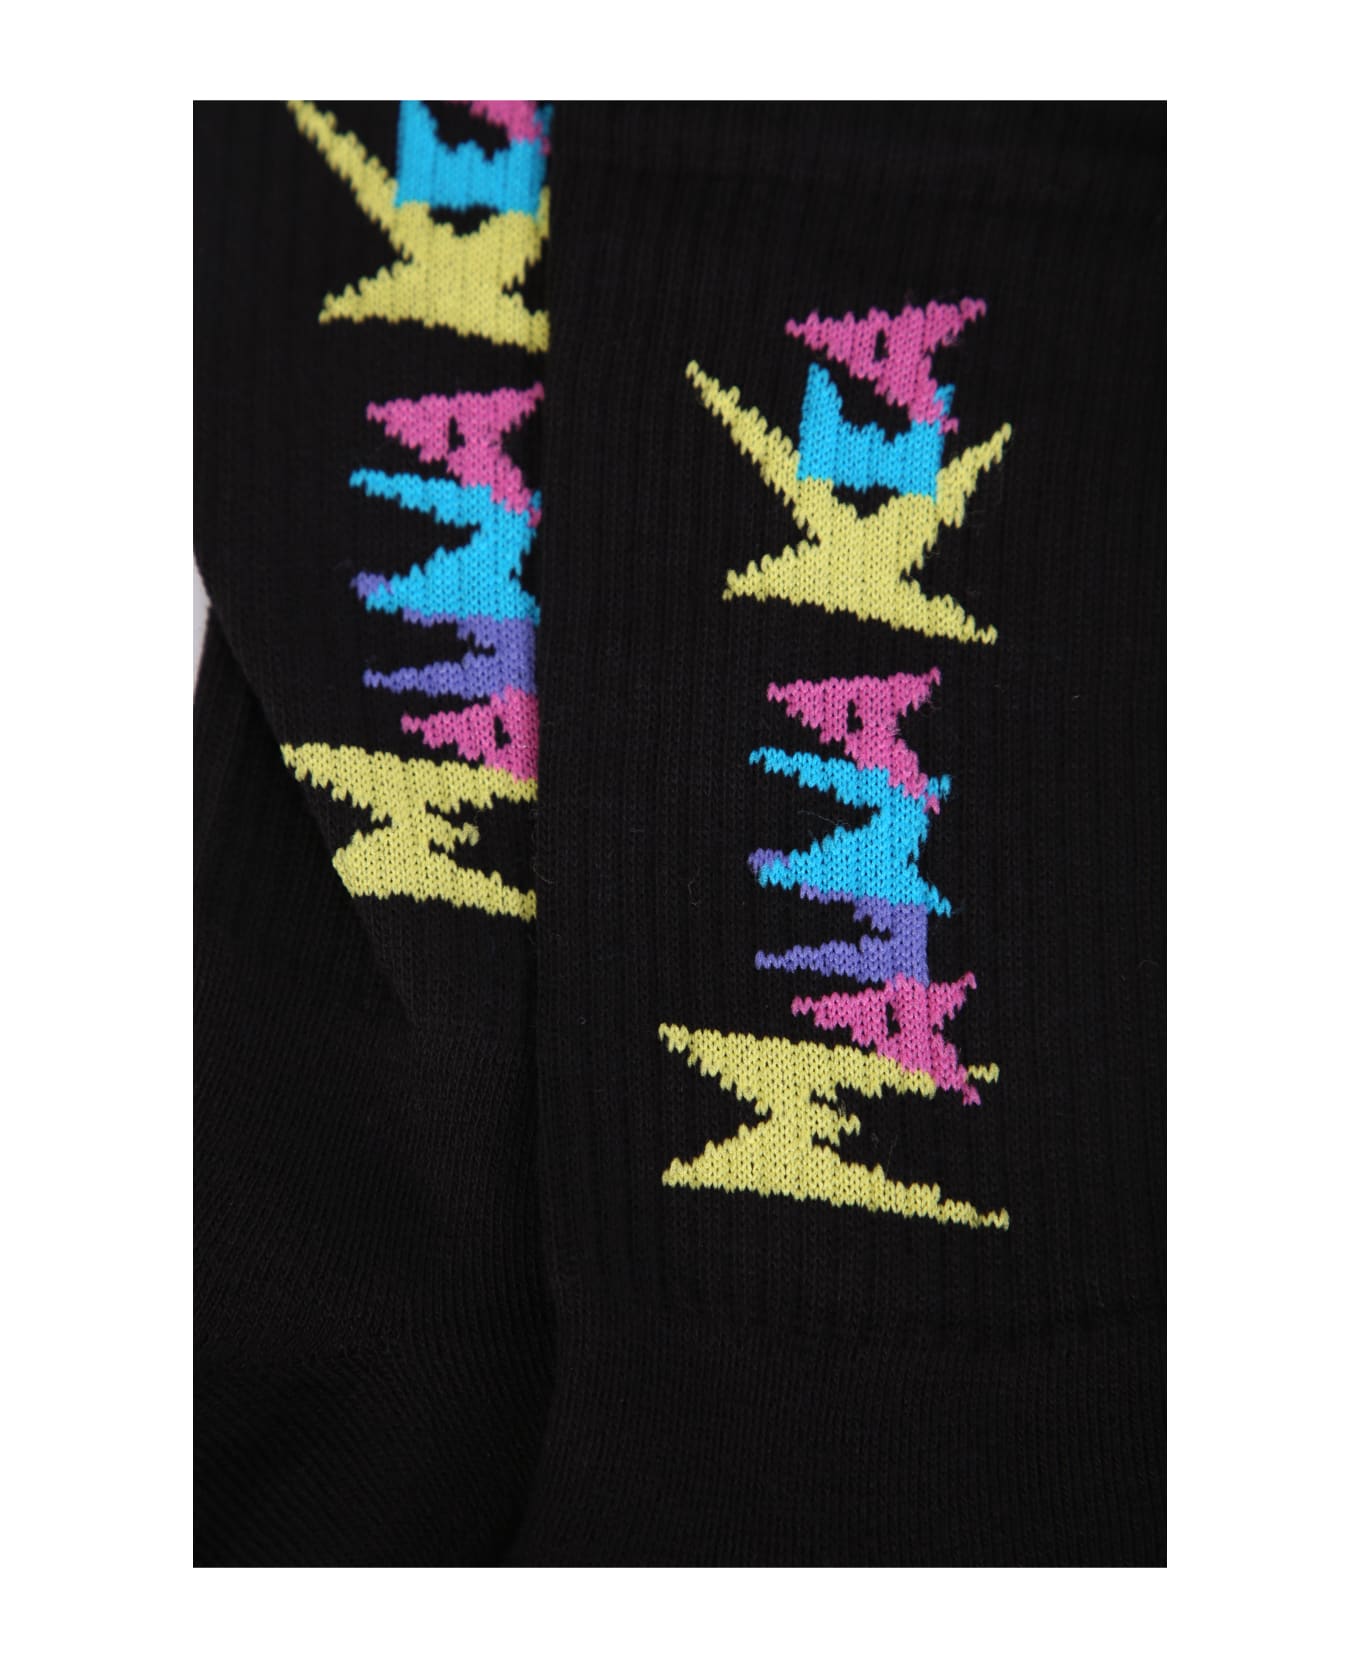 Mauna Kea Cotton Blend Logo Socks - Black 靴下